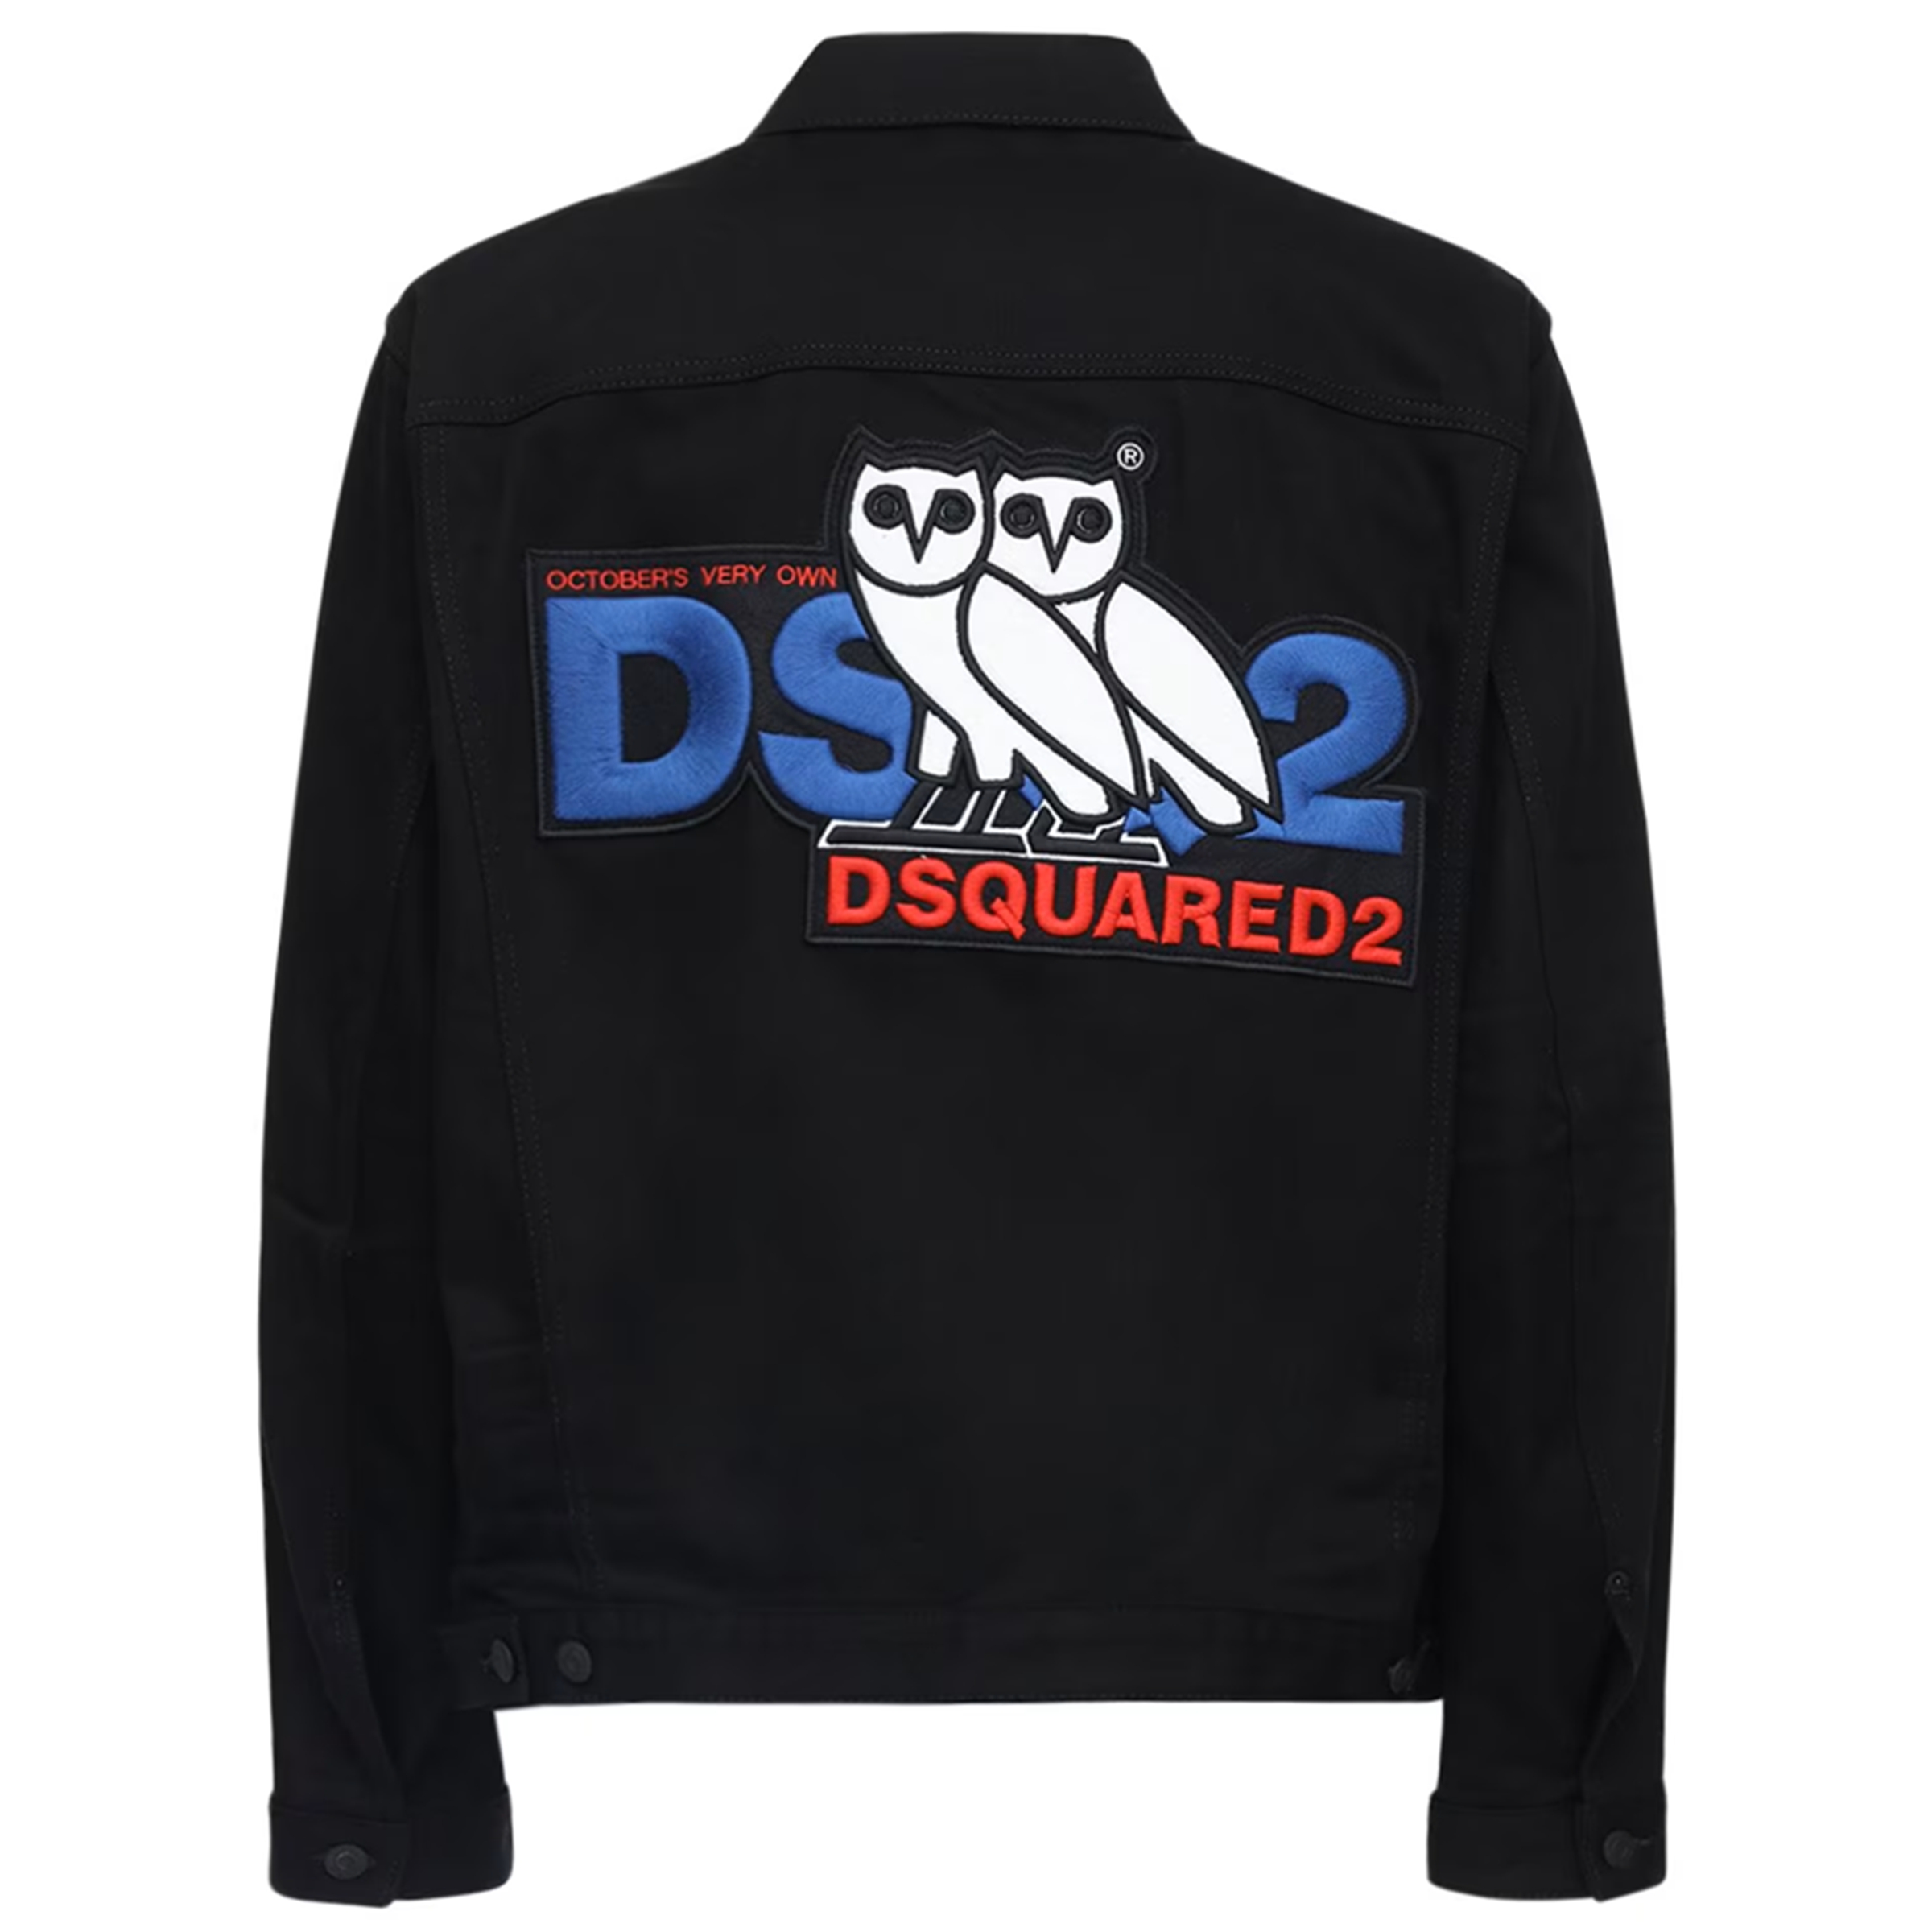 DSQUARED2 x OVO - "Capsule Logo" Denim Jacket